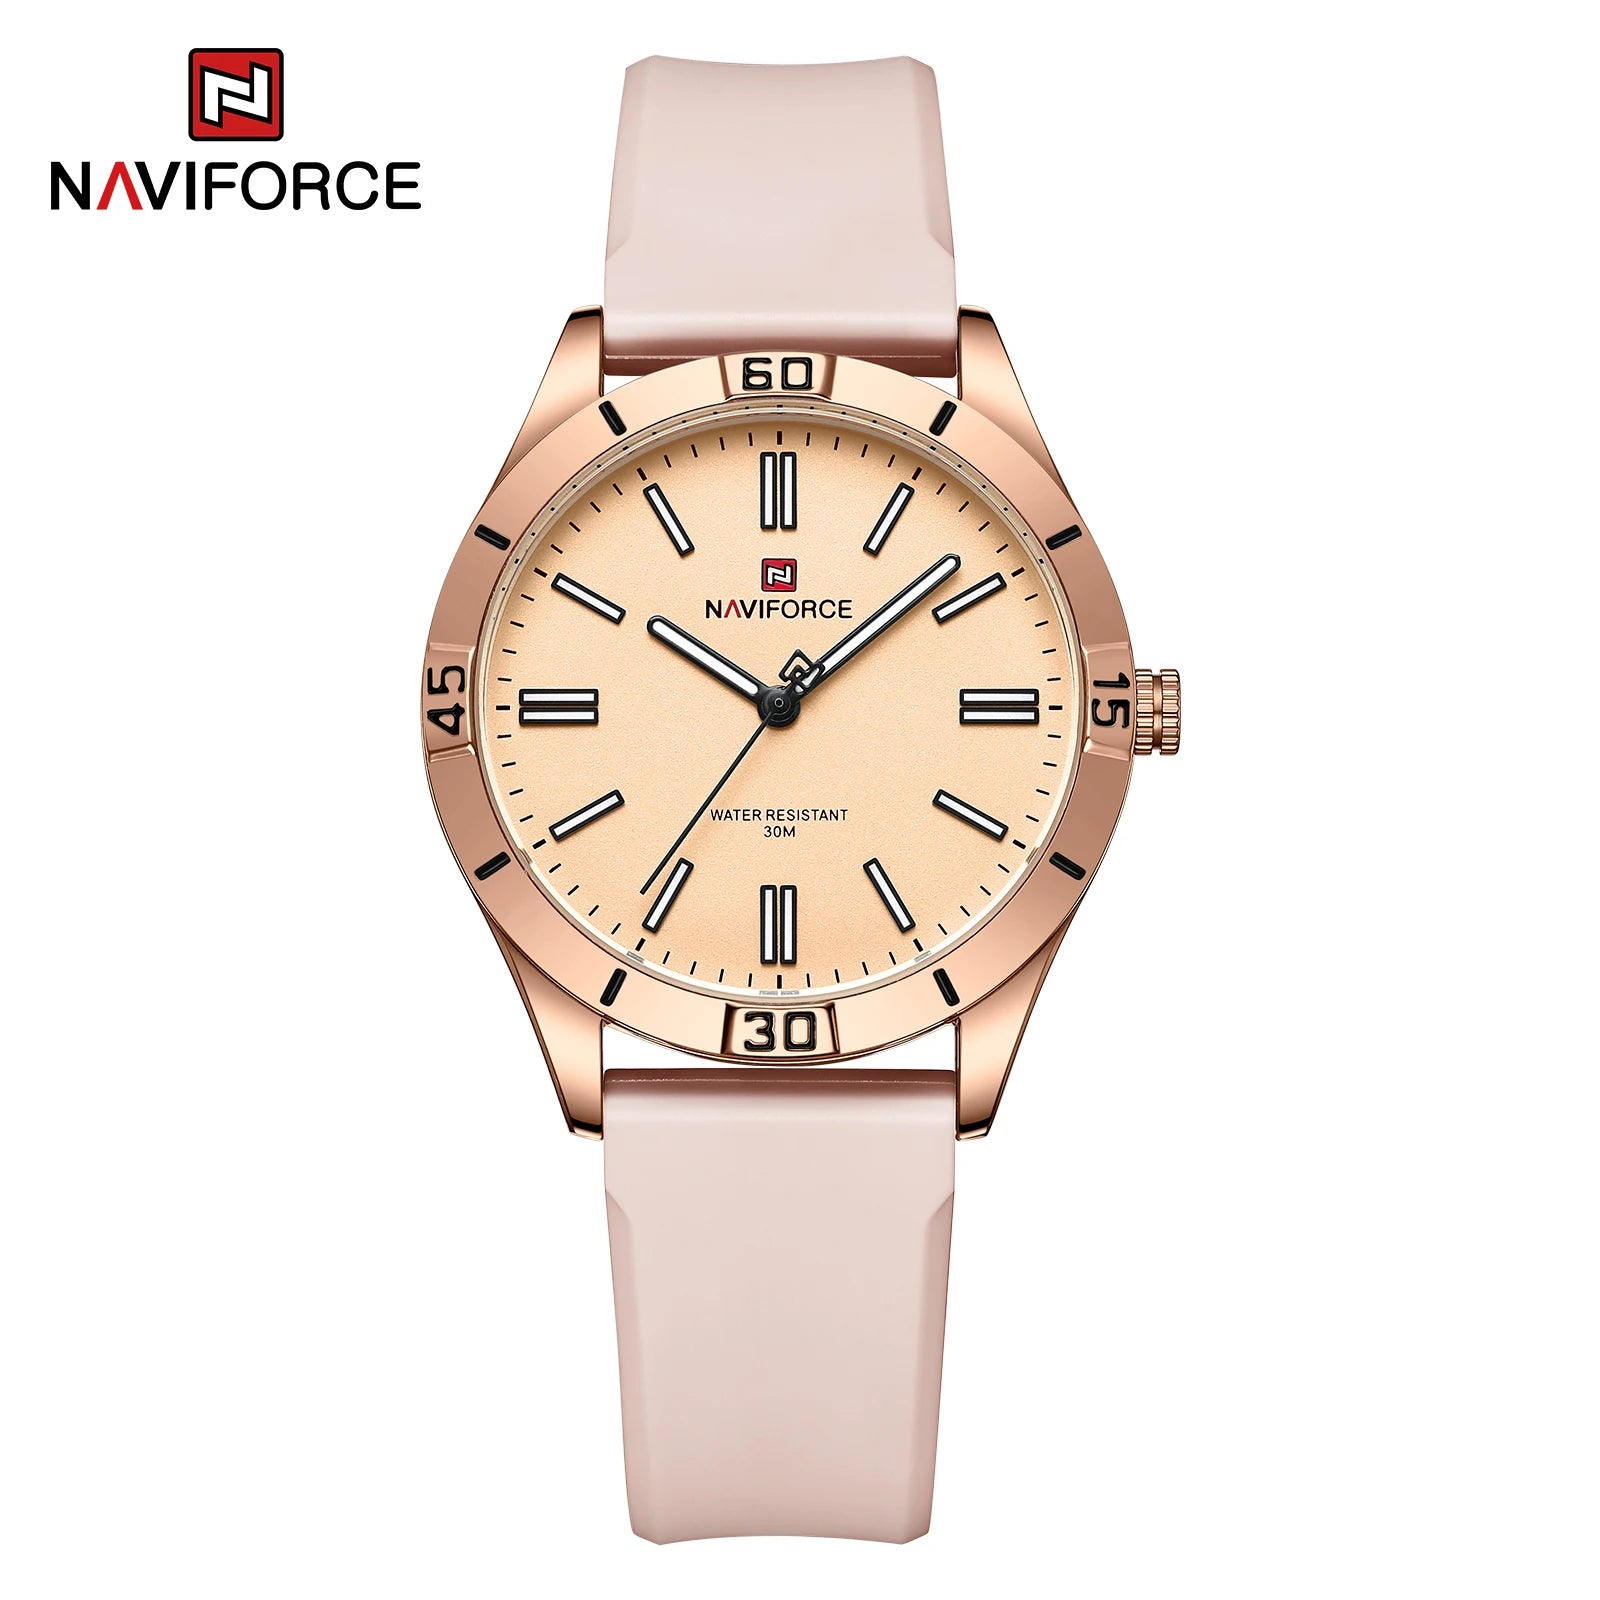 NAVIFORCE 5010 - Watches Nepal